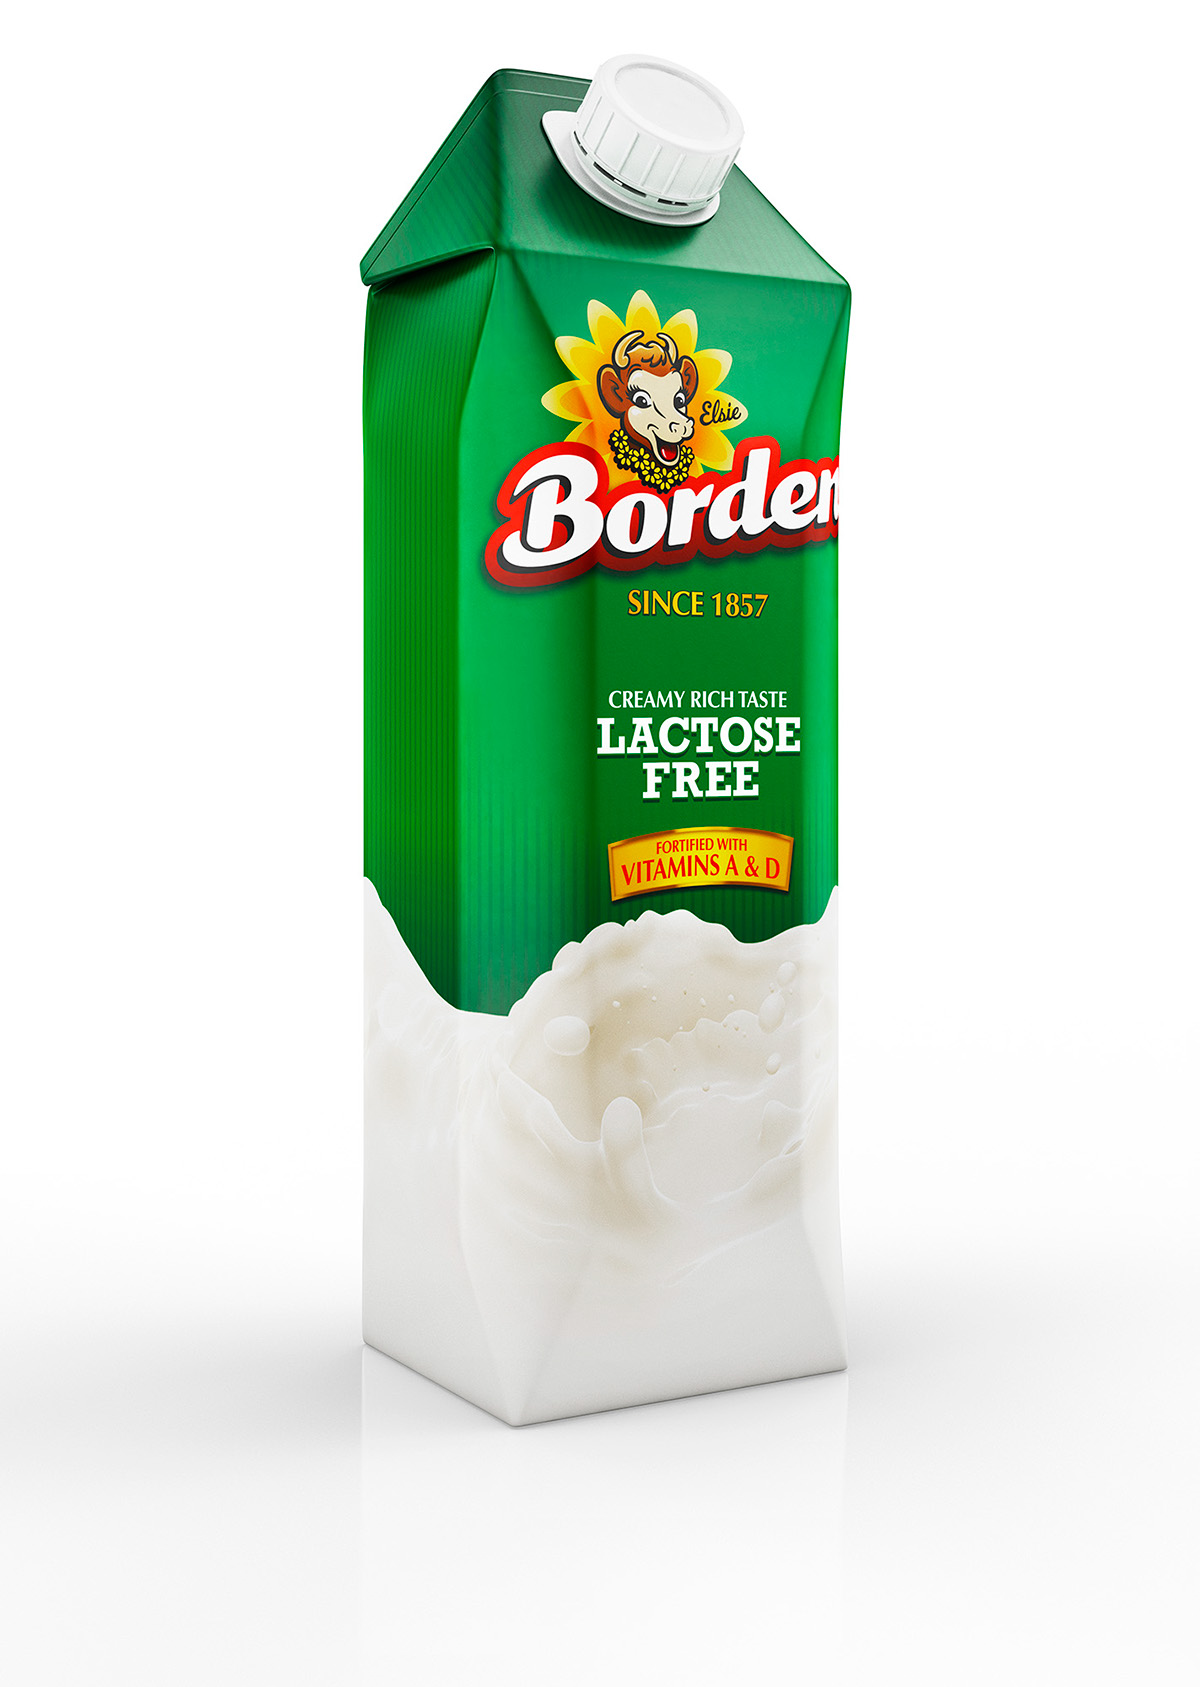 Souverein CG 3D postproduction borden milk carton Dairy Marcel Christ luminous creative imaging fedde souverein